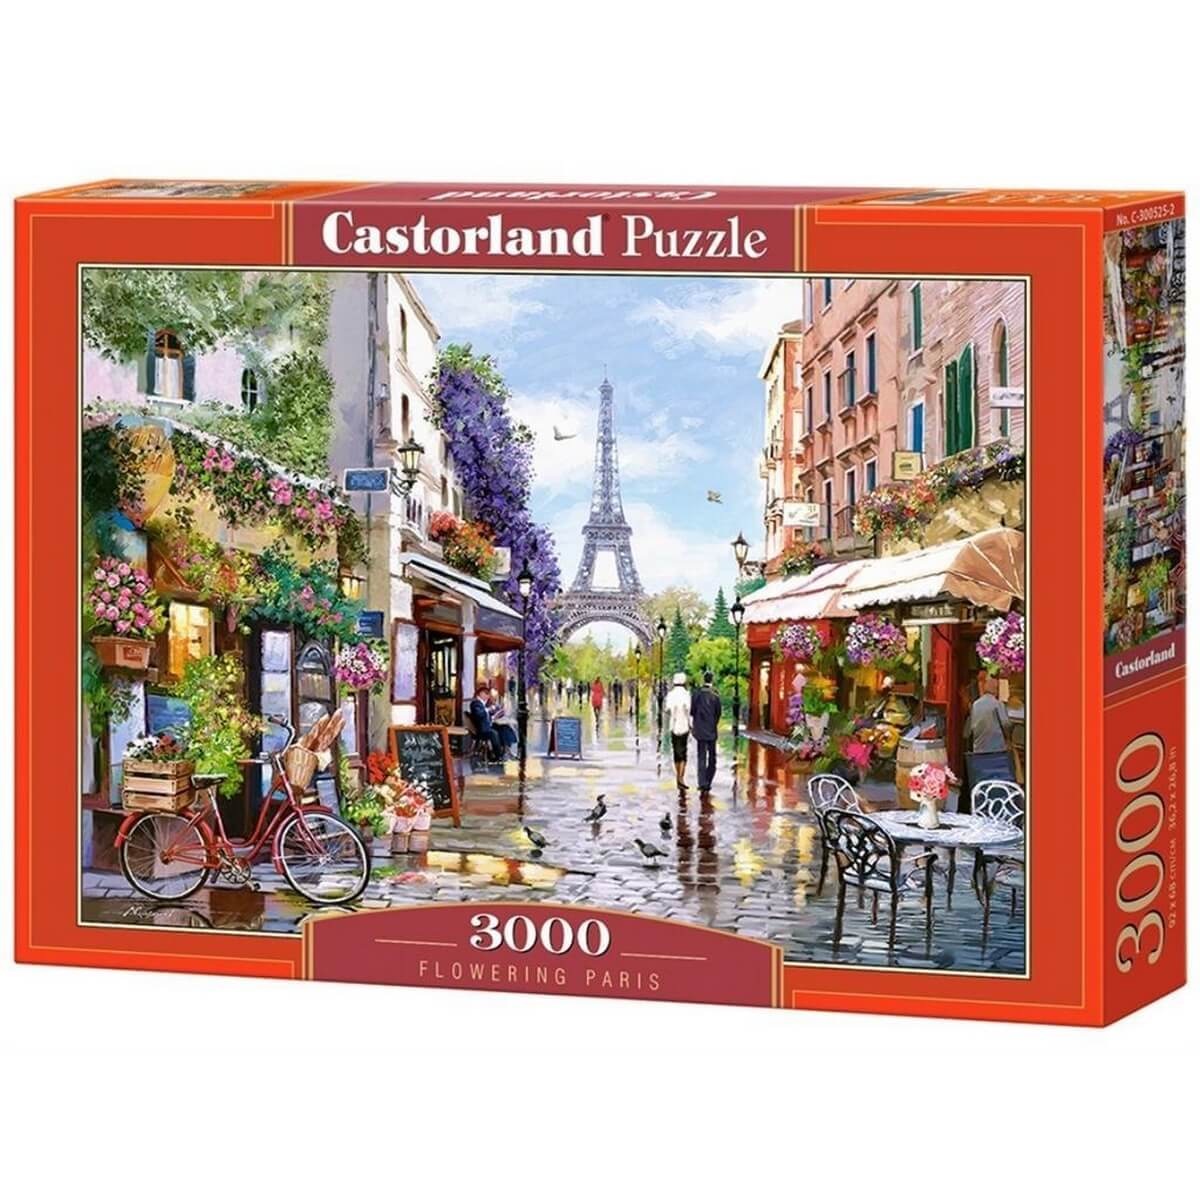 Puzzle 4000 pièces : Carnaval de Rio - Castorland - Rue des Puzzles